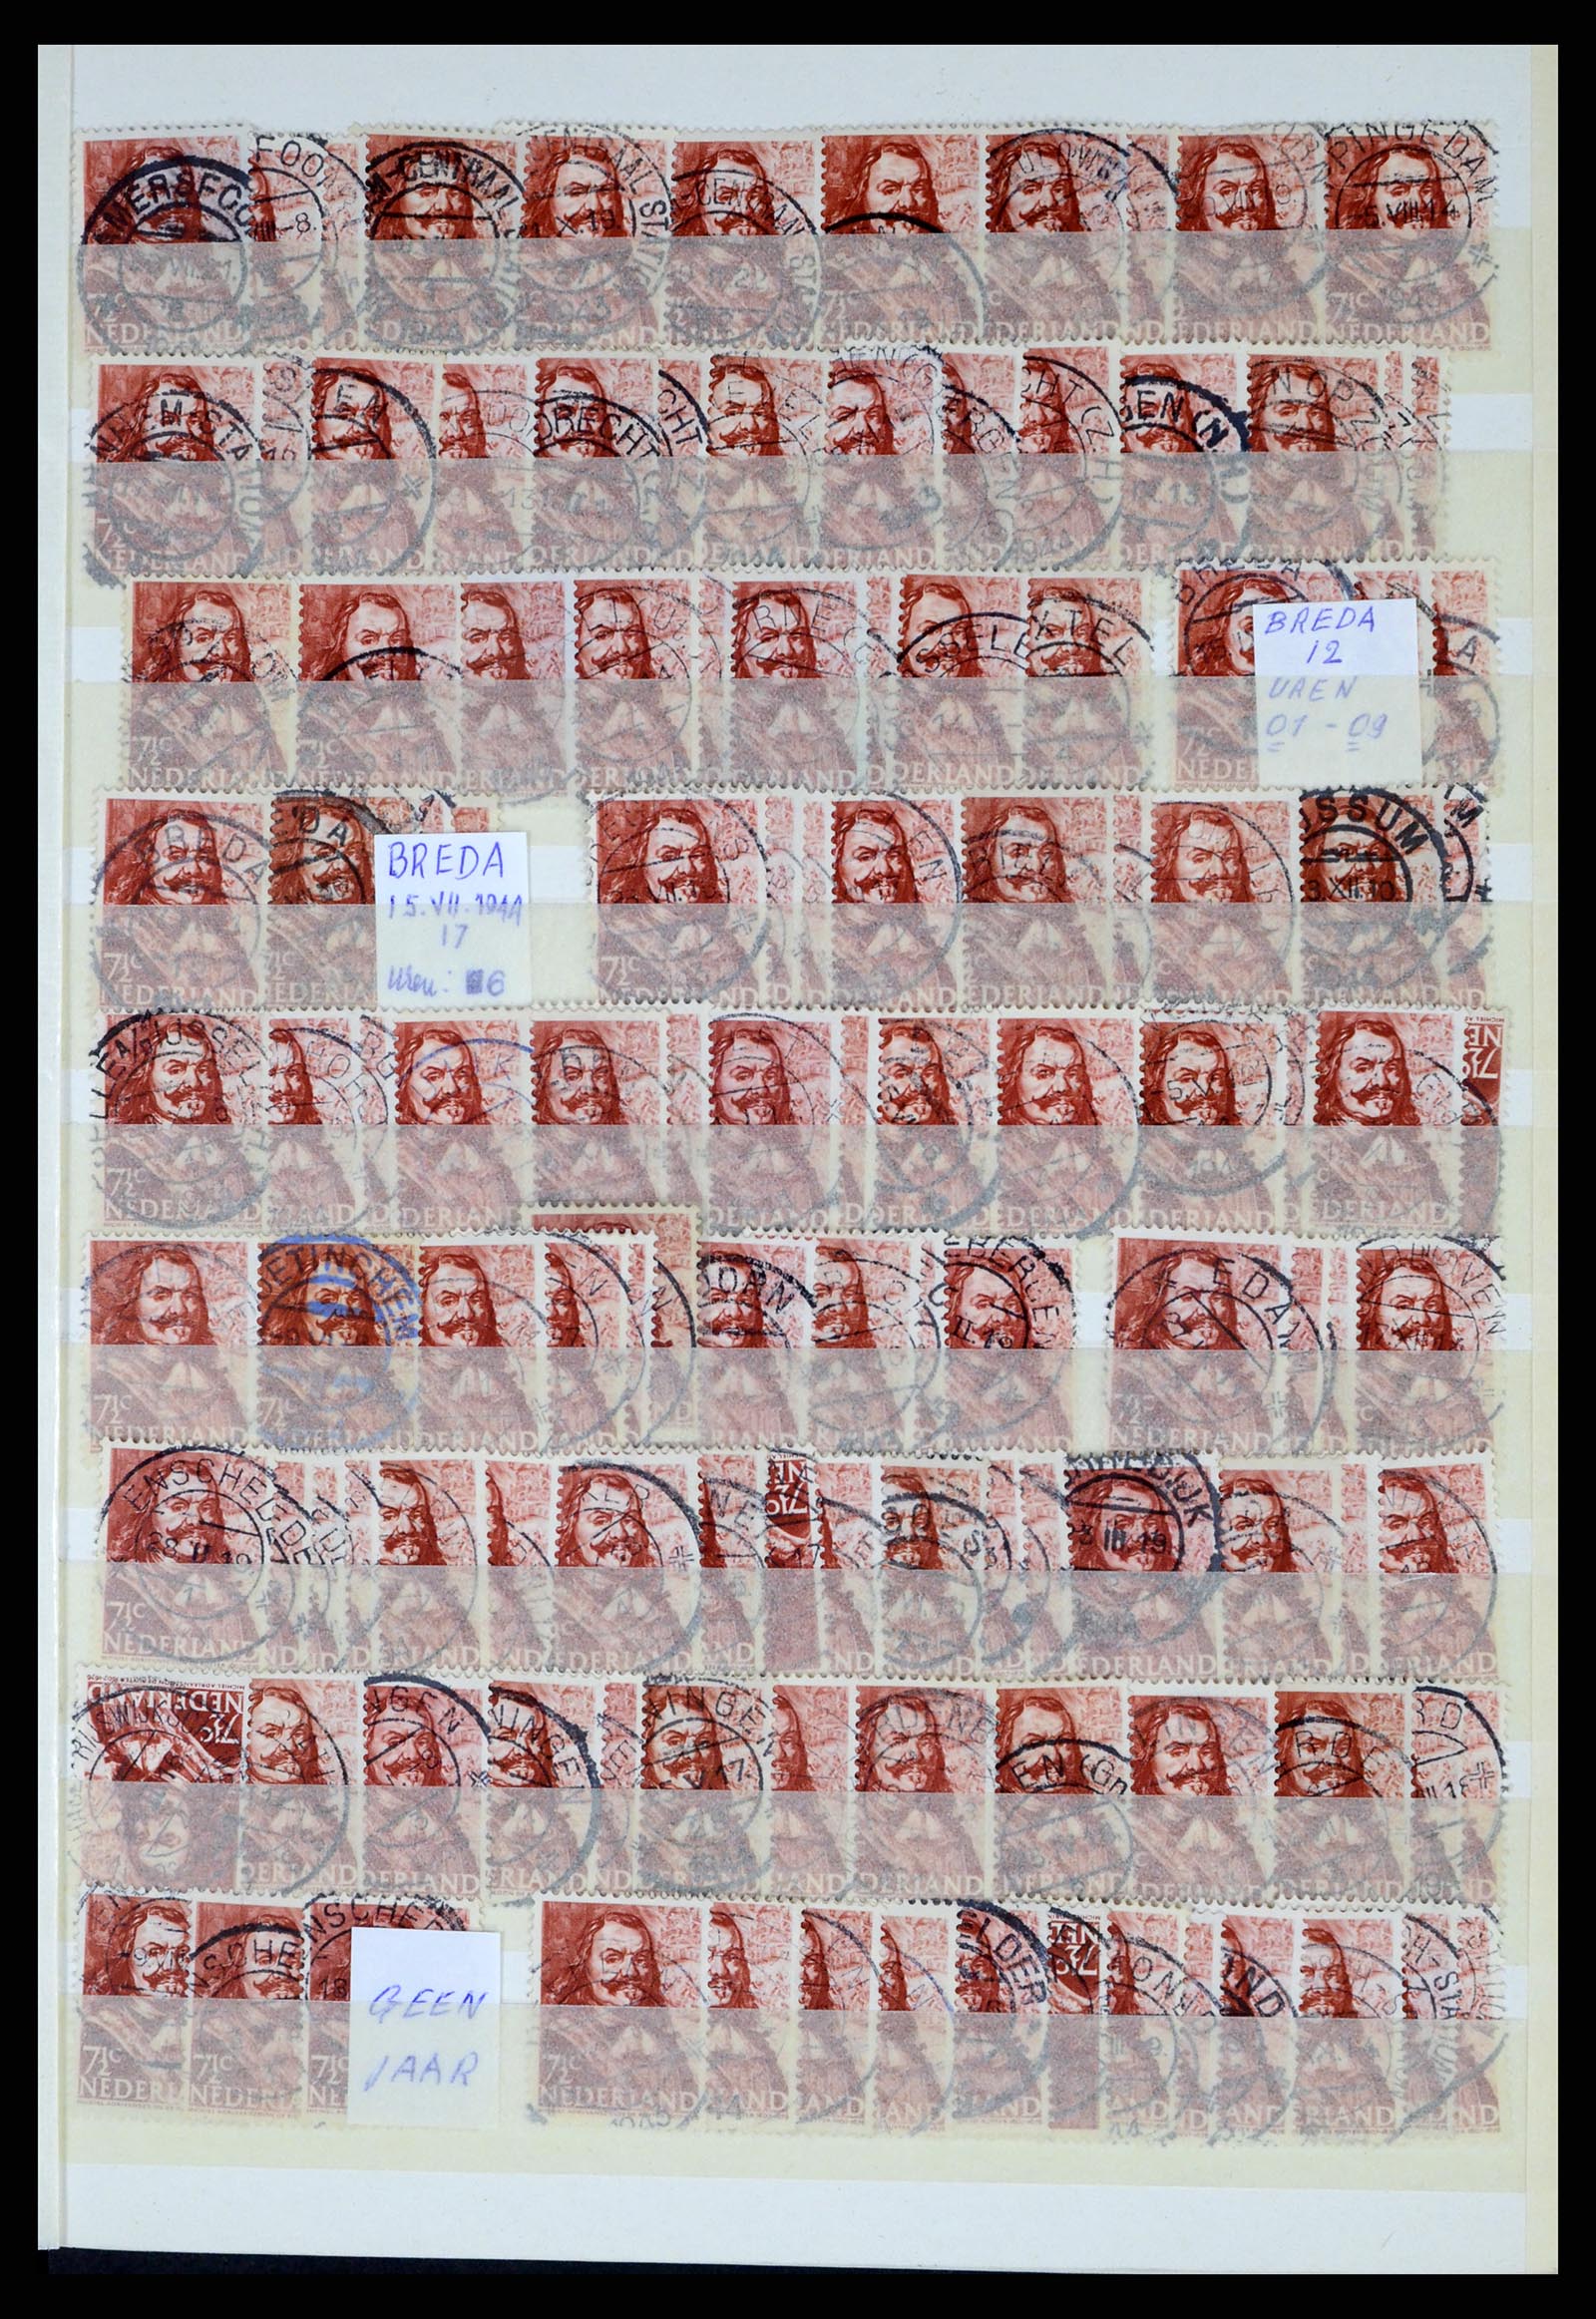 37424 035 - Stamp collection 37424 Netherlands shortbar cancels.